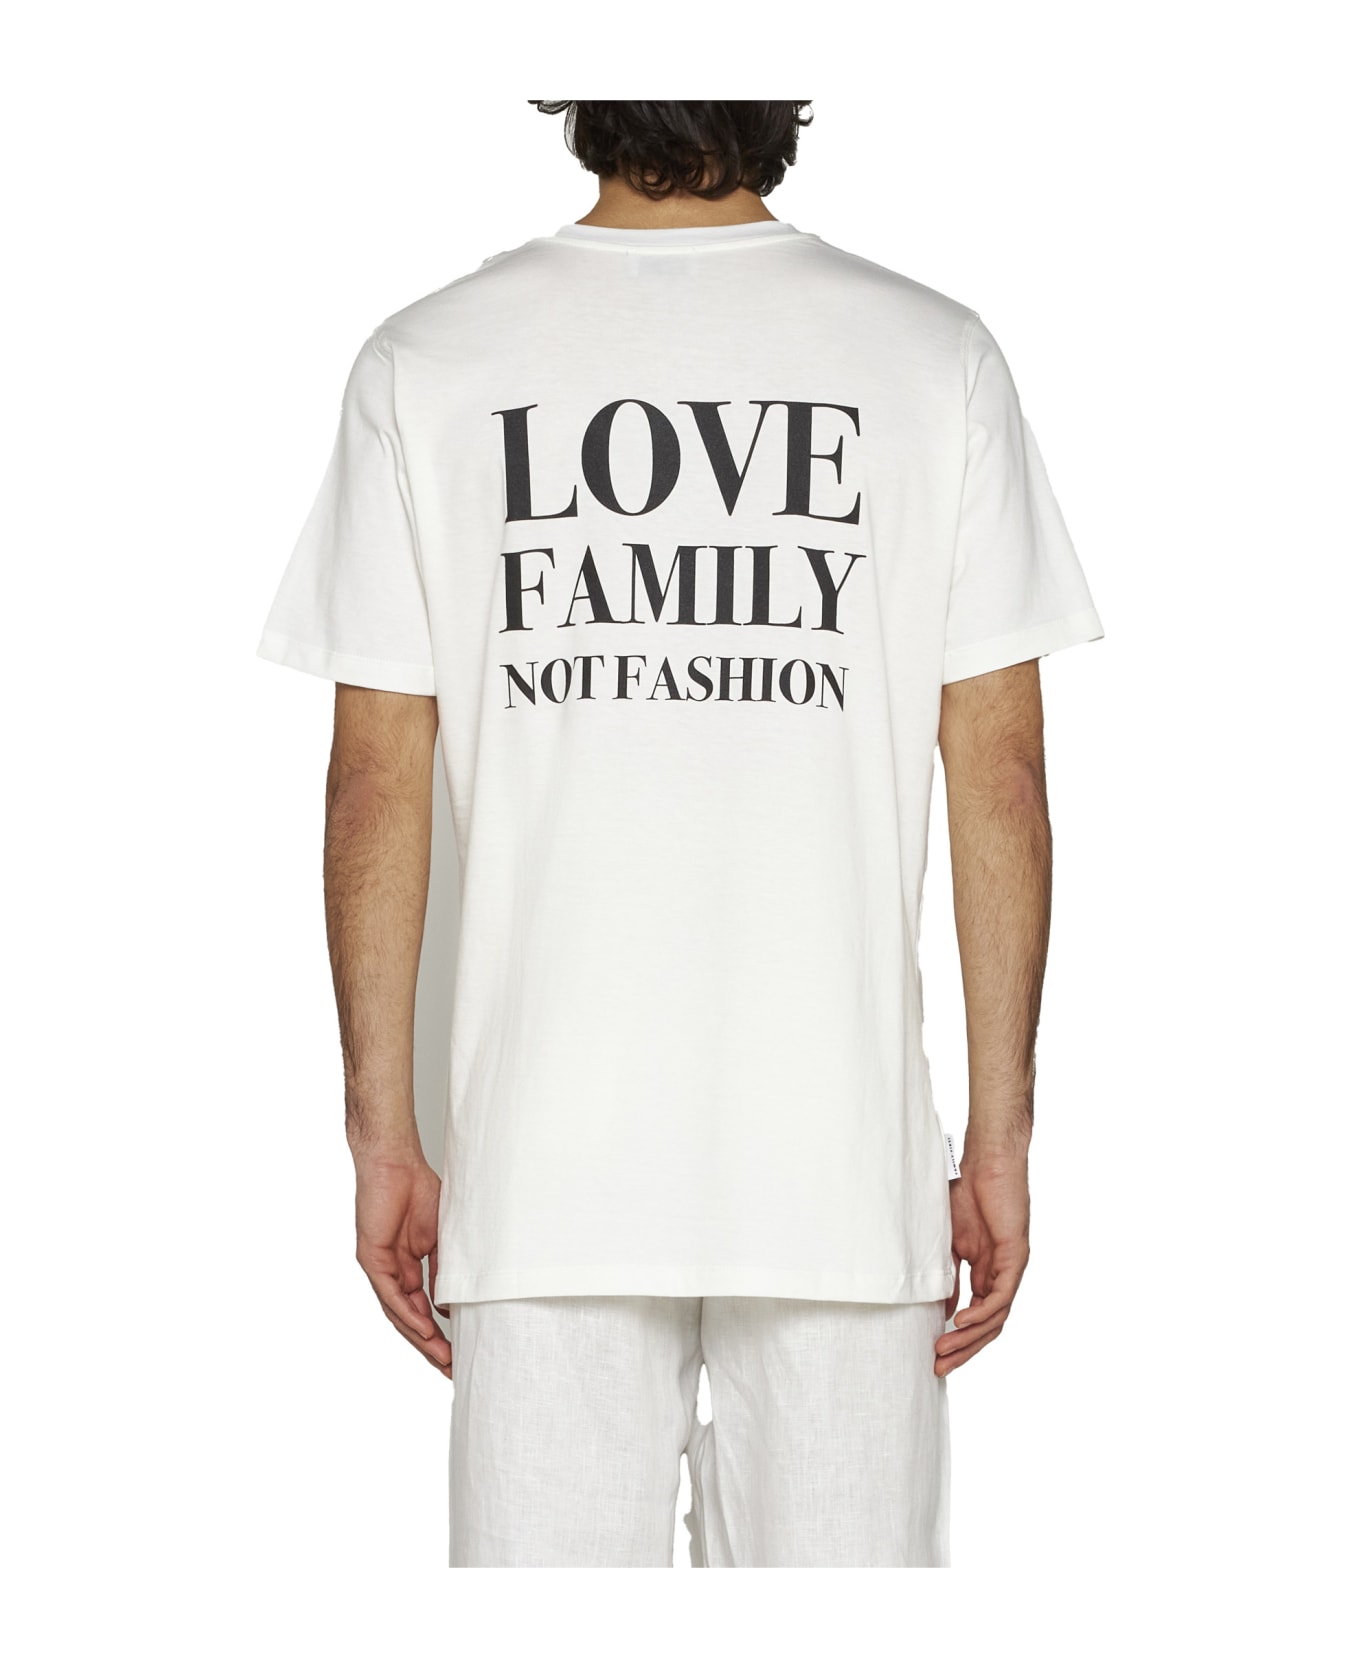 Family First Milano T-Shirt - White